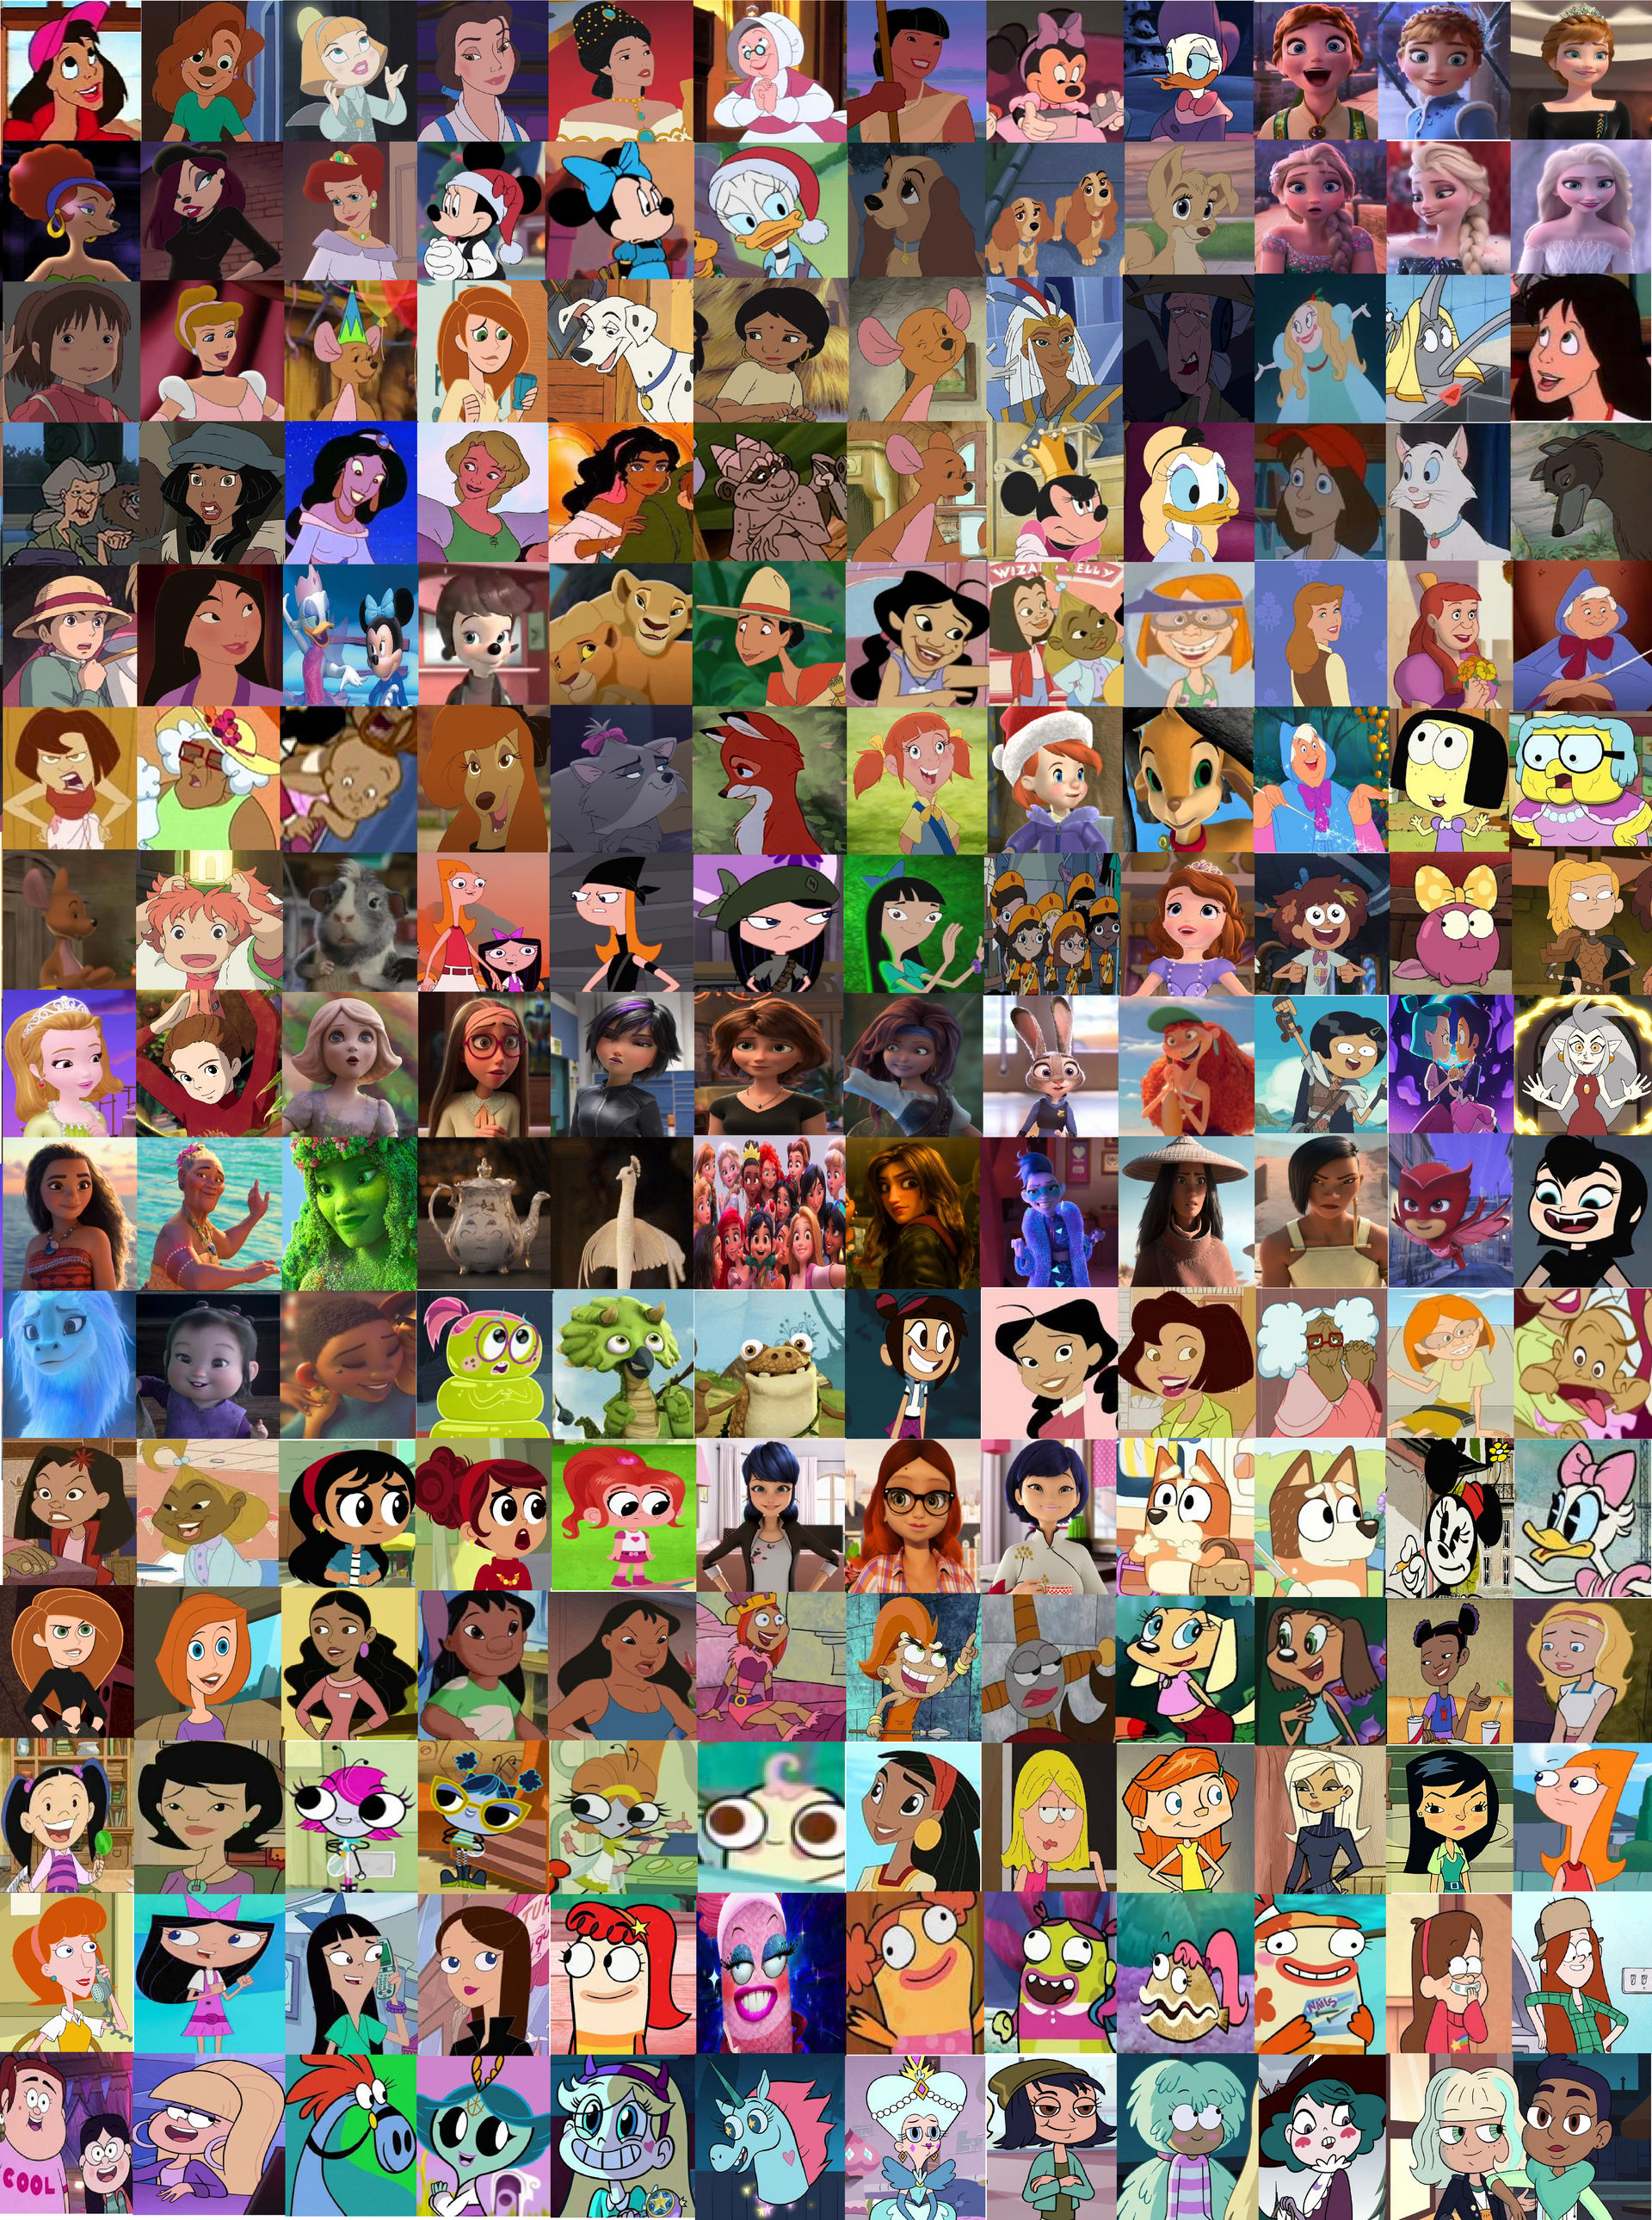 Disney Animated Heroines 2 by Blossomgutz on DeviantArt